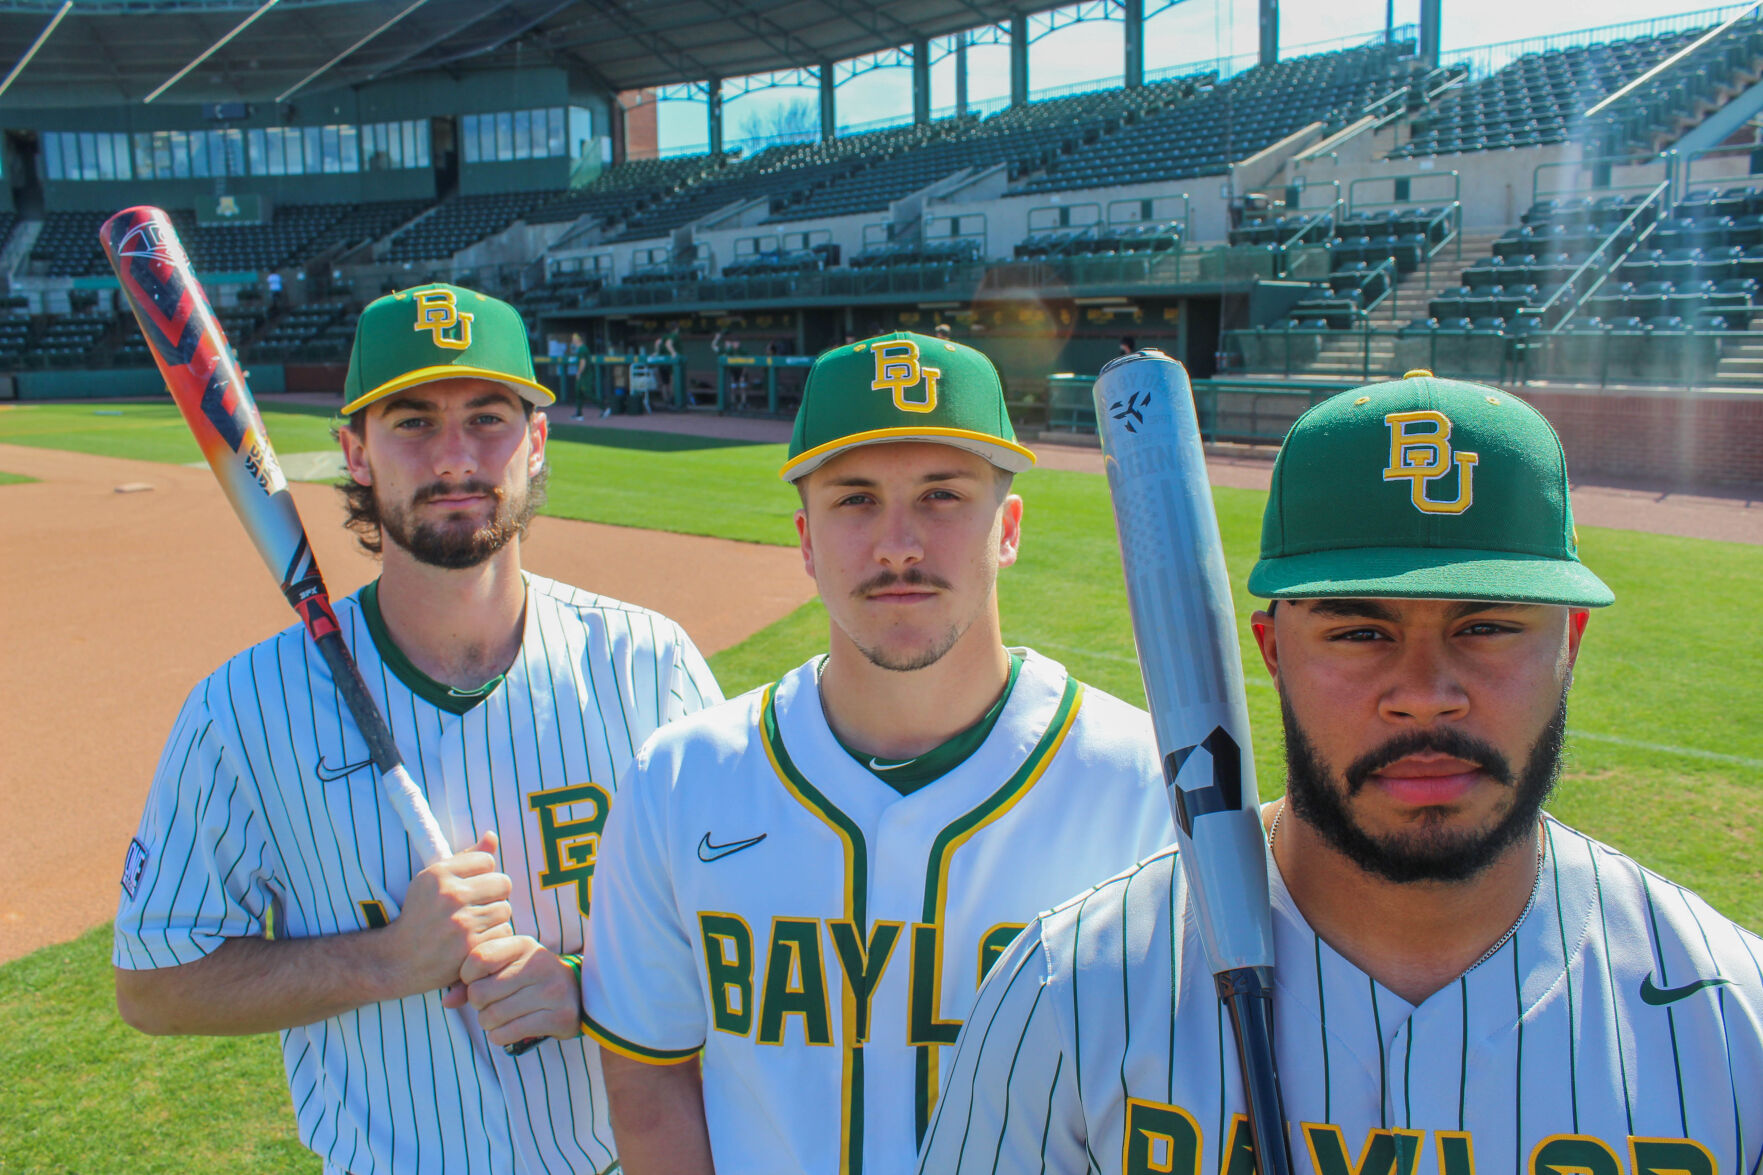 Baylor Bears baseball legends jersey